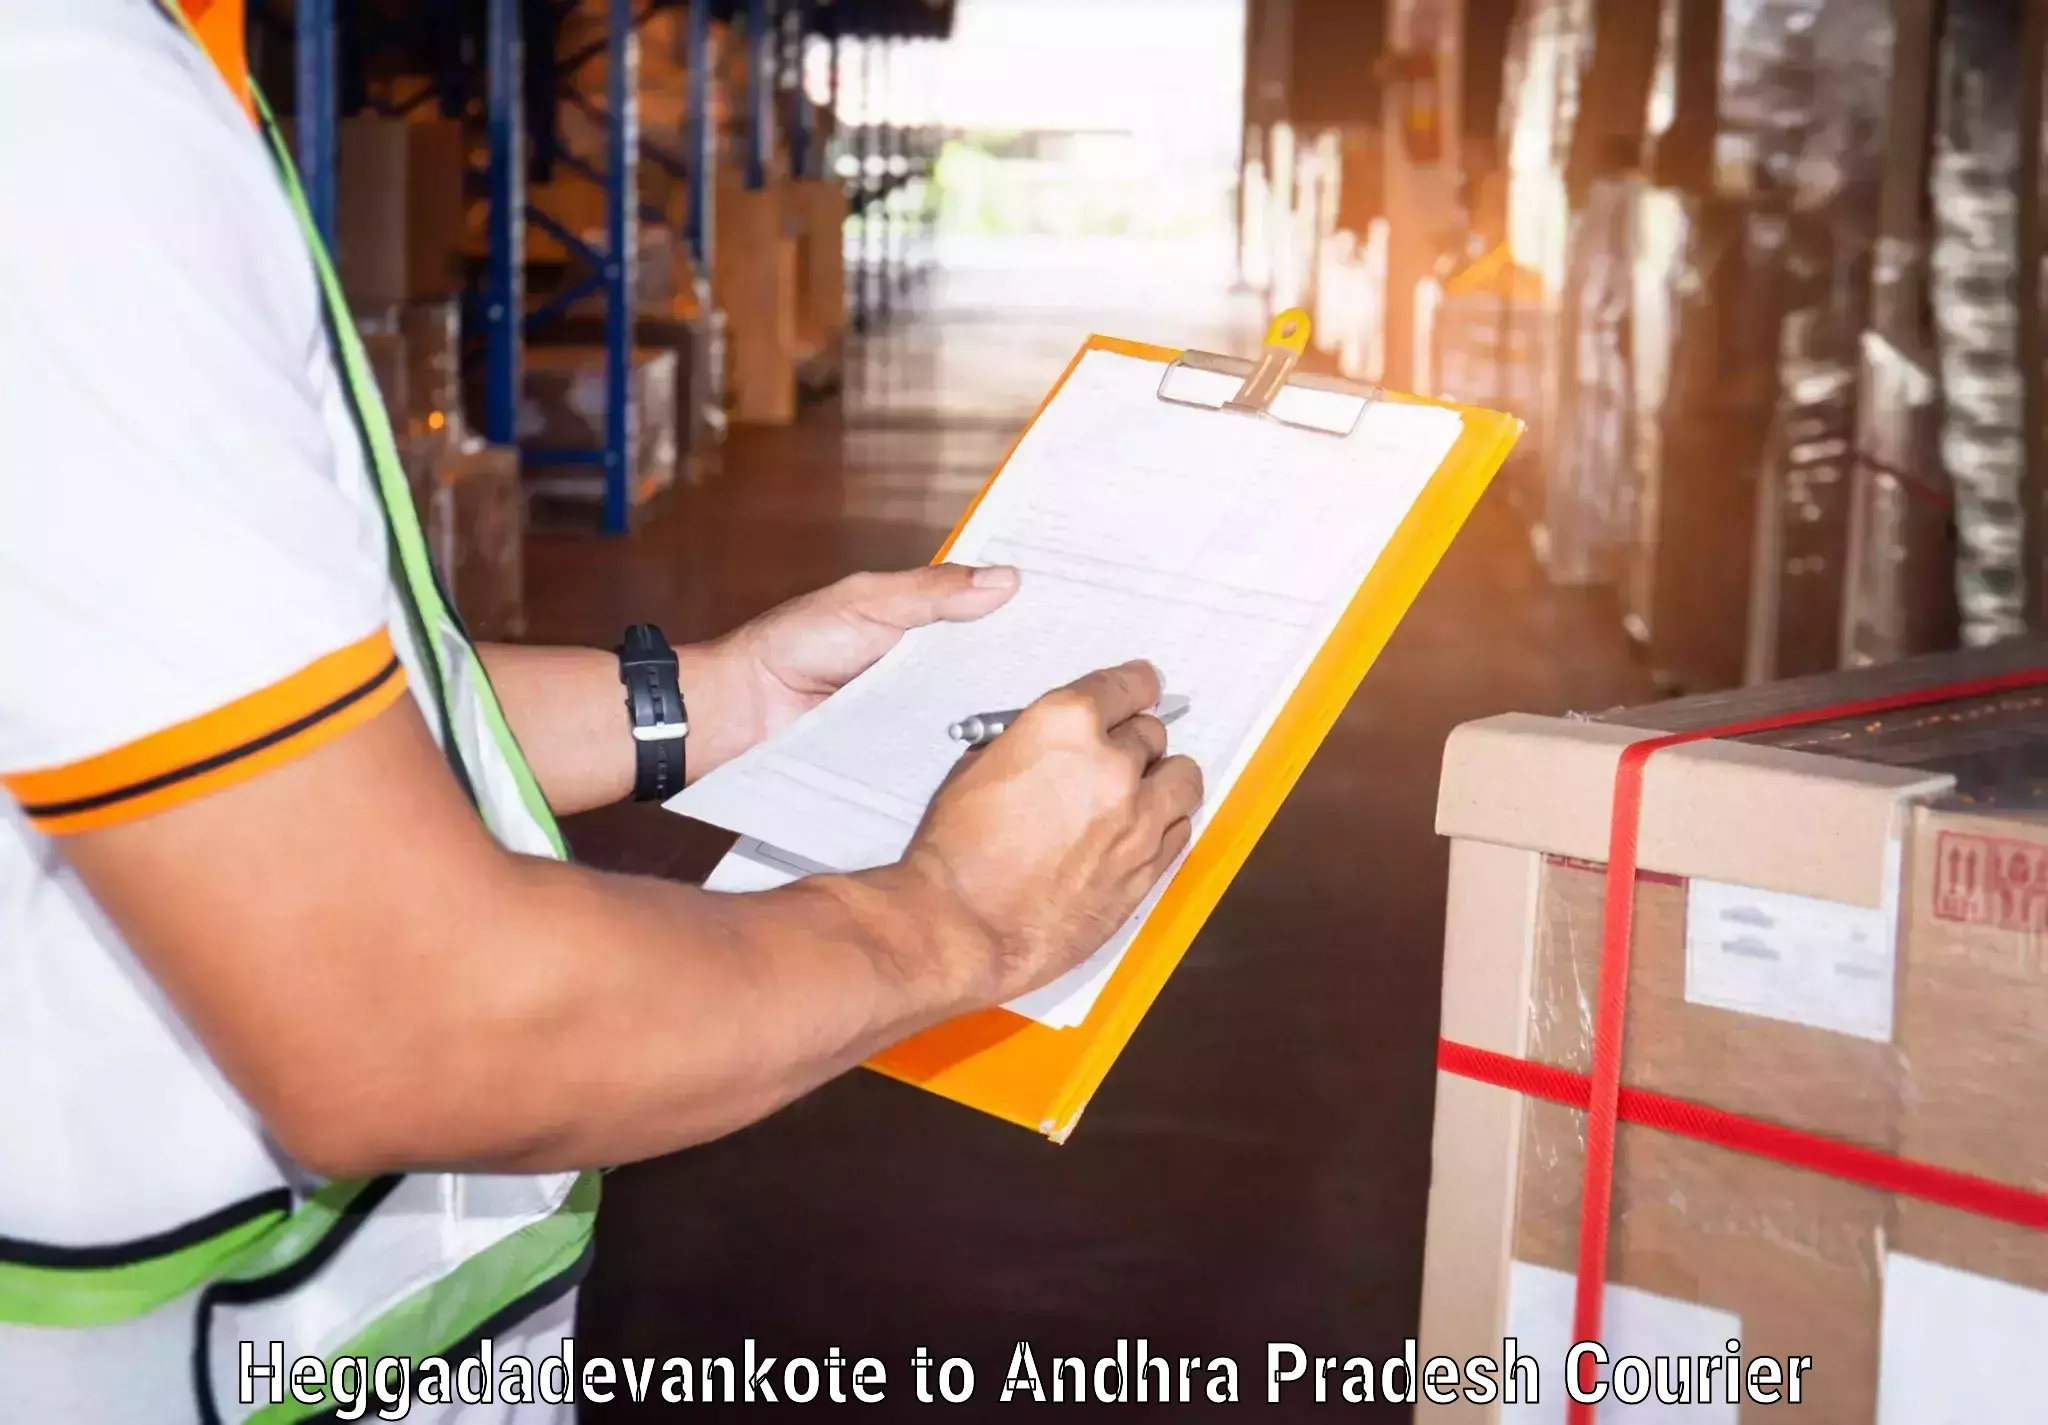 Advanced shipping network Heggadadevankote to Tirupati